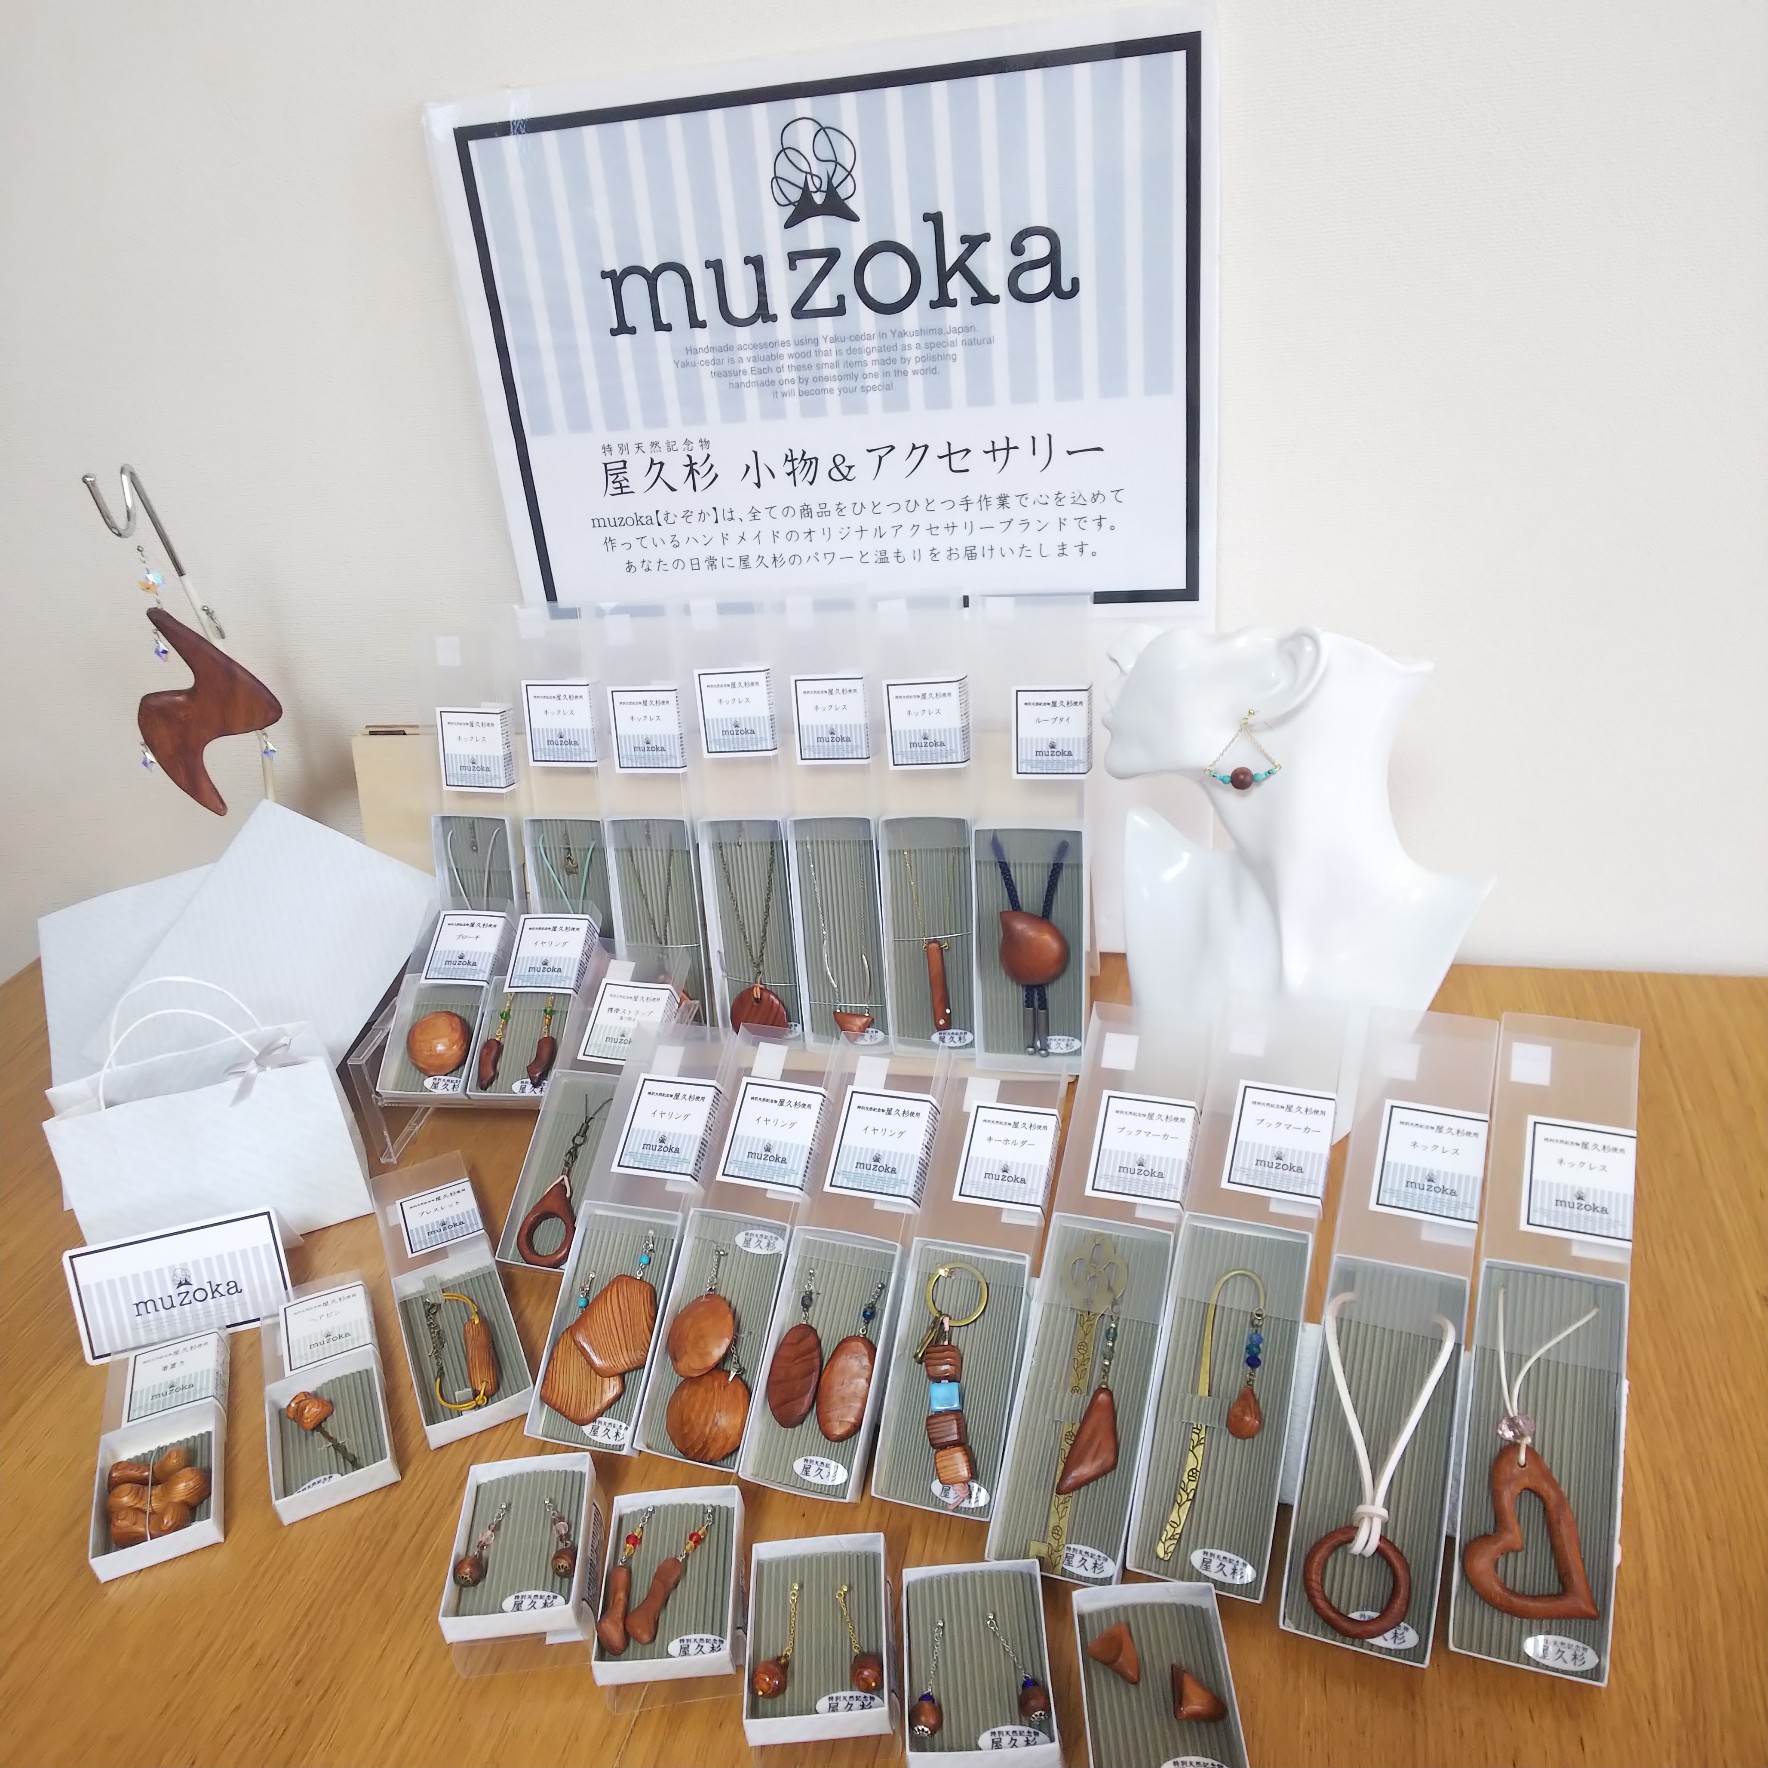 muzokaは屋久杉を使った小物・アクセサリーのハンドメイドブランドです。